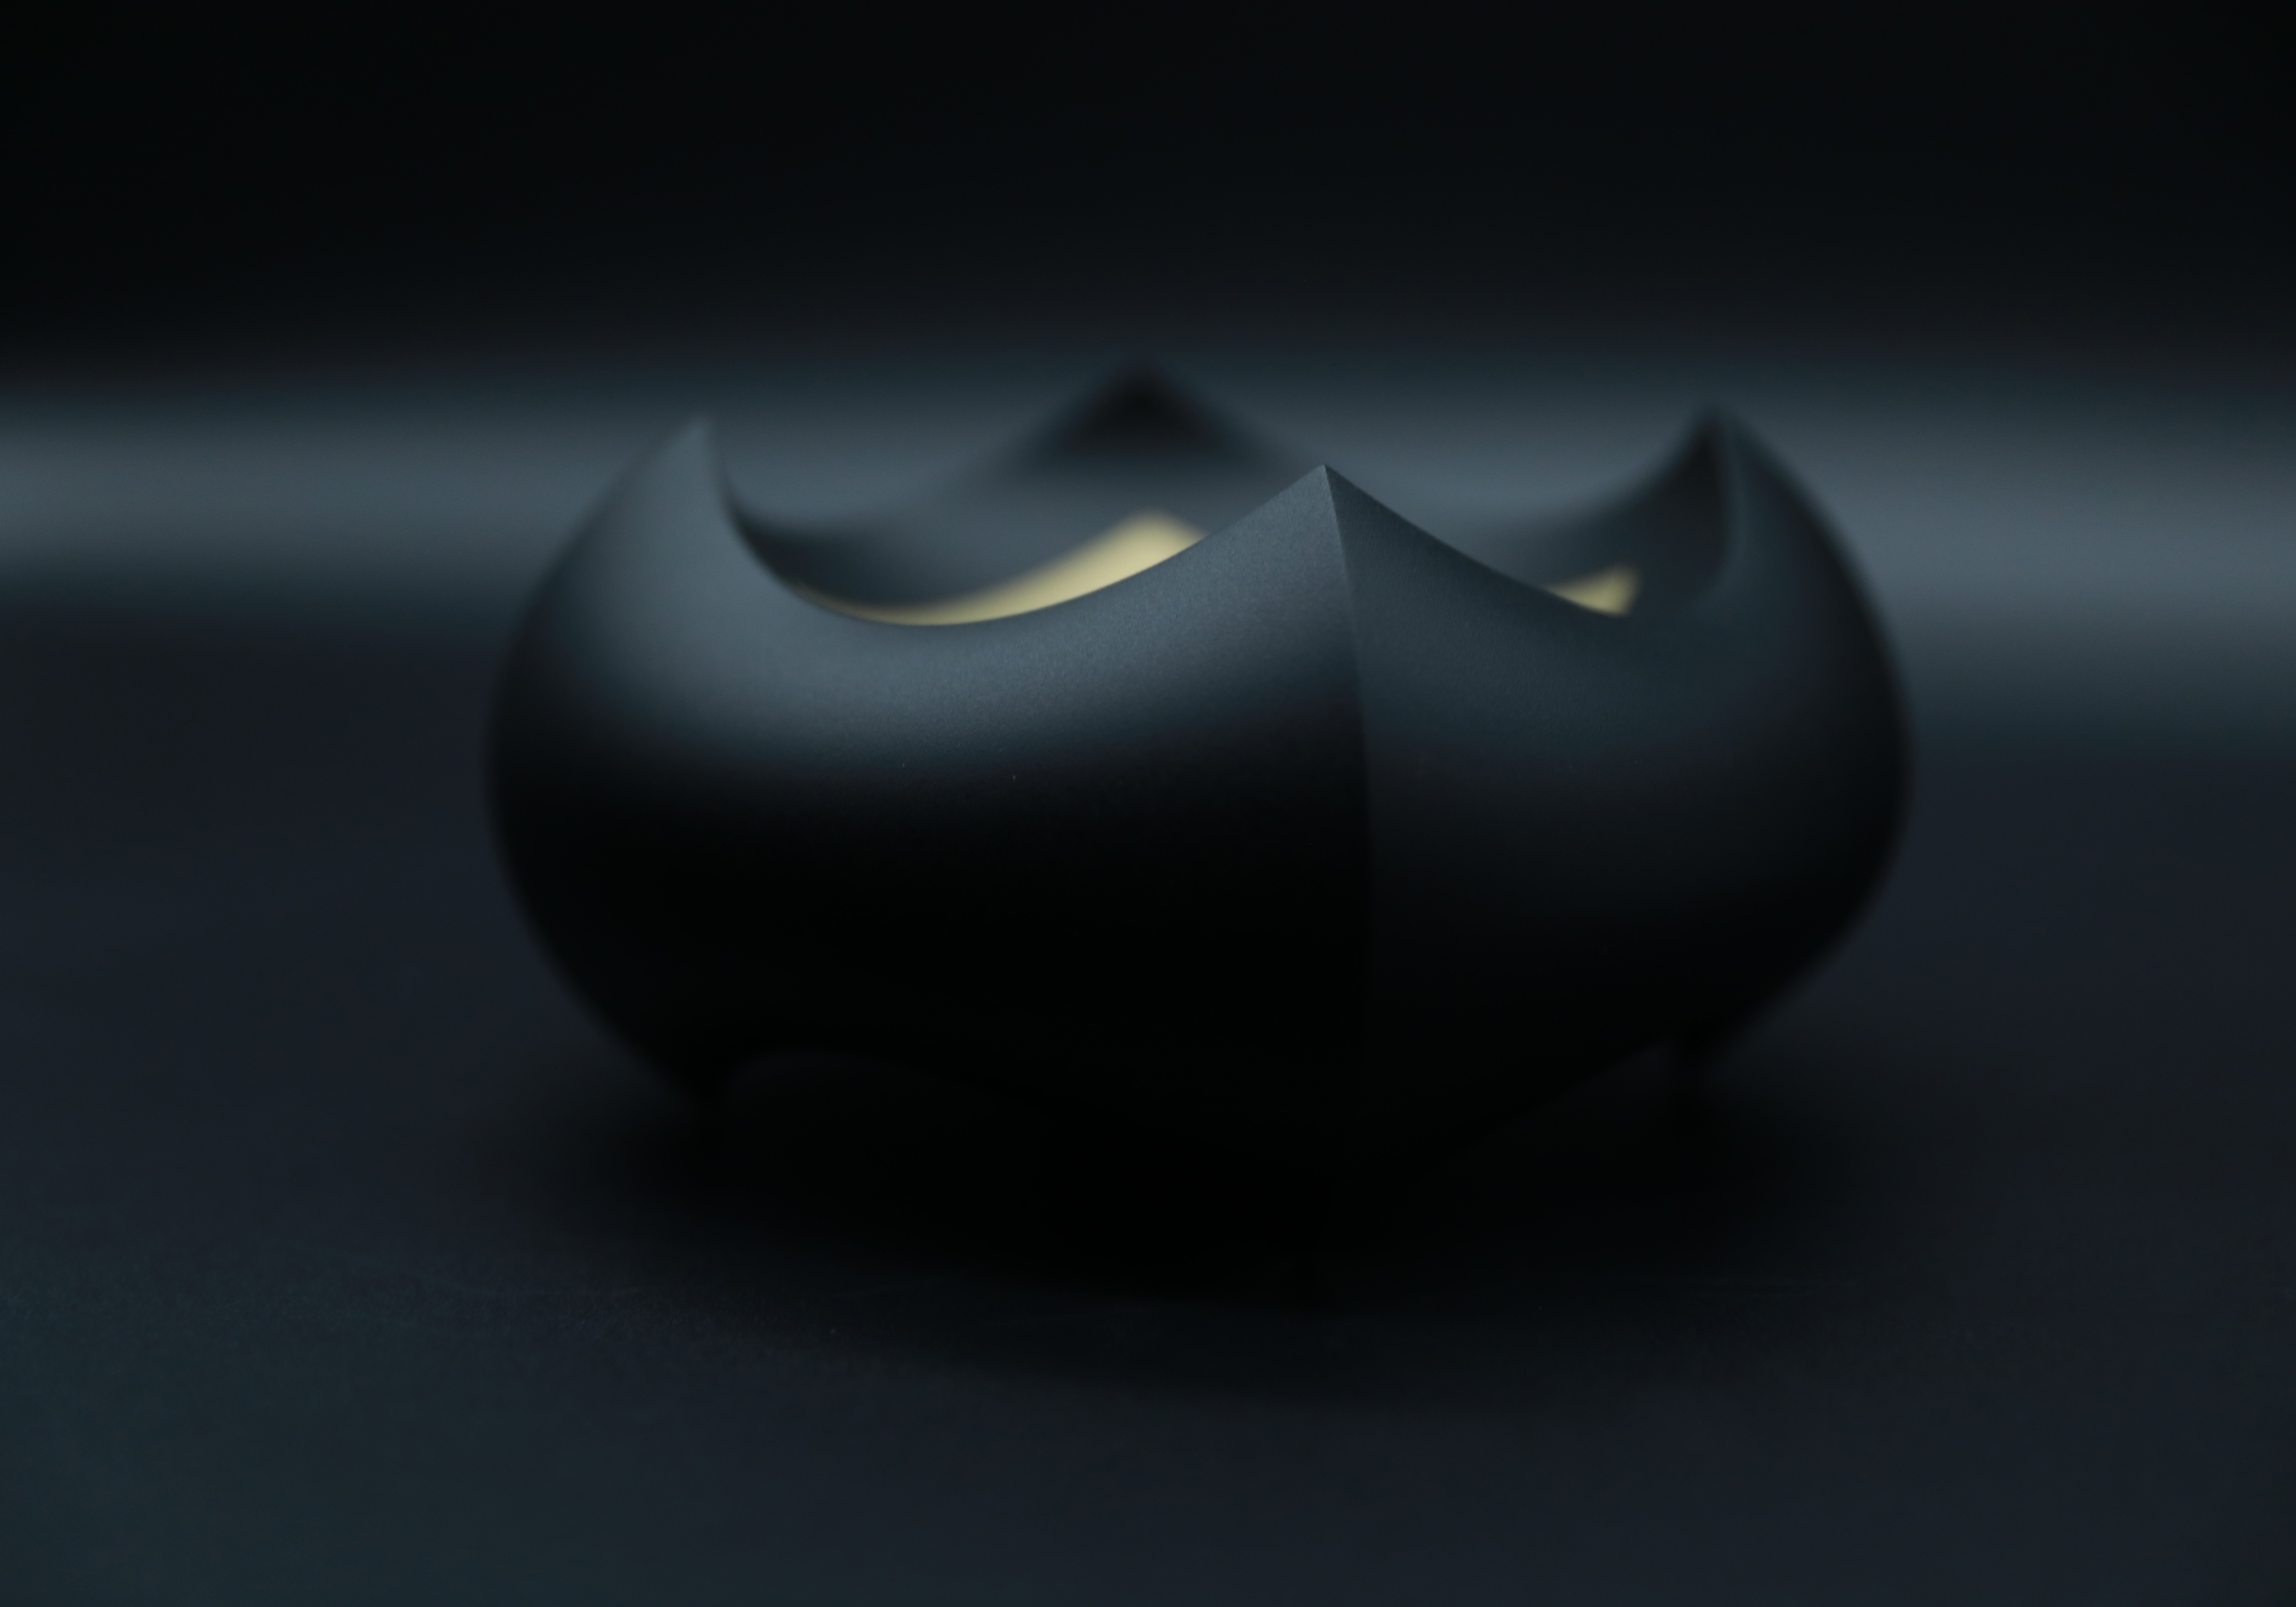 London Design Awards Winner - BLACK JADE-Desktop Accessories Series